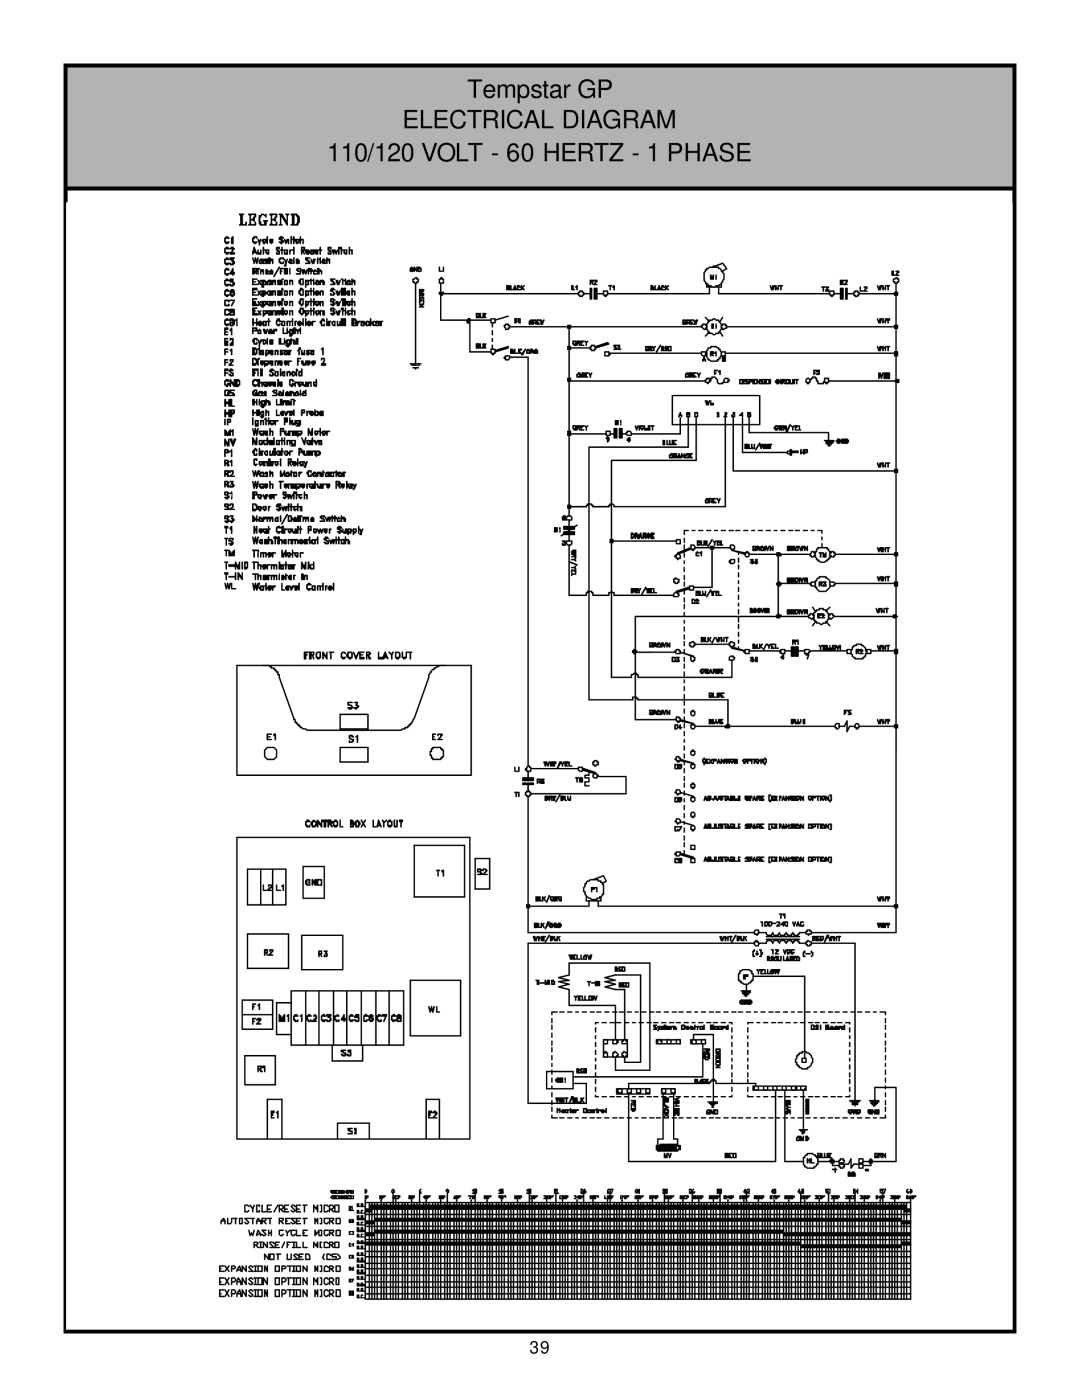 Jackson Tempstar GP technical manual Electrical Diagram, 110/120 VOLT - 60 HERTZ - 1 PHASE 